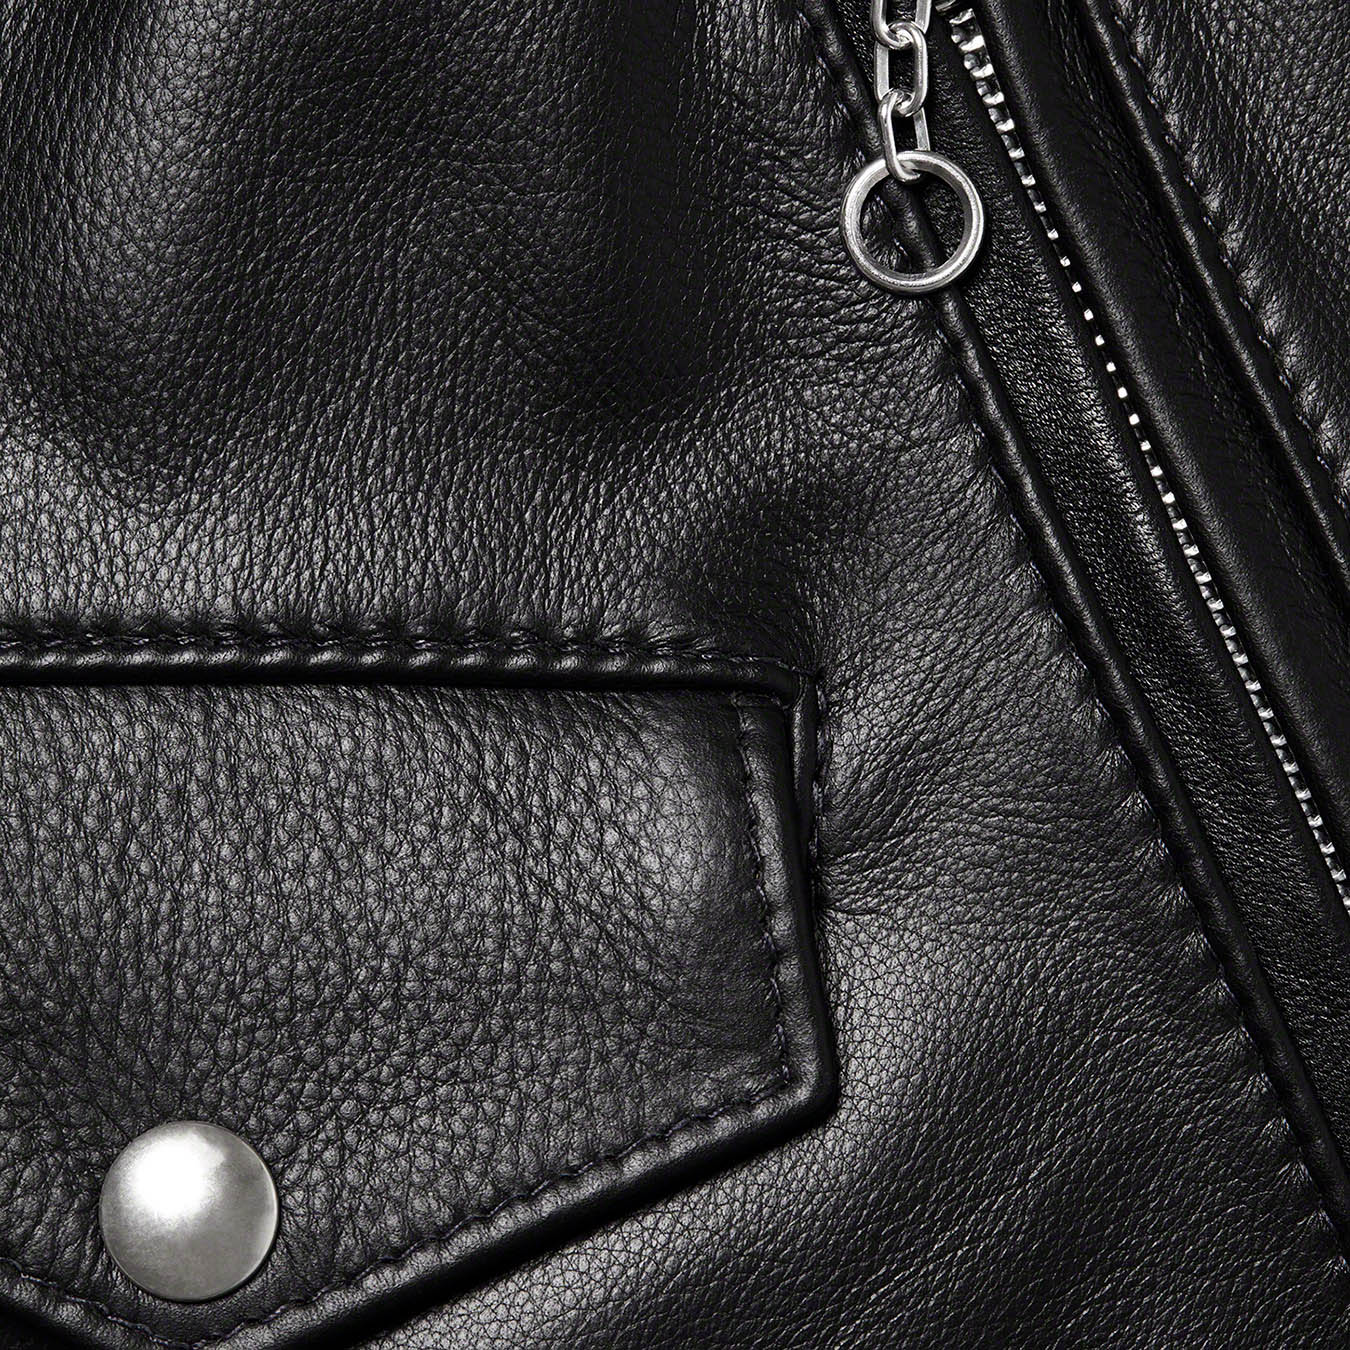 Supreme®/Schott® The Crow Perfecto Leather Jacket | Supreme 21fw